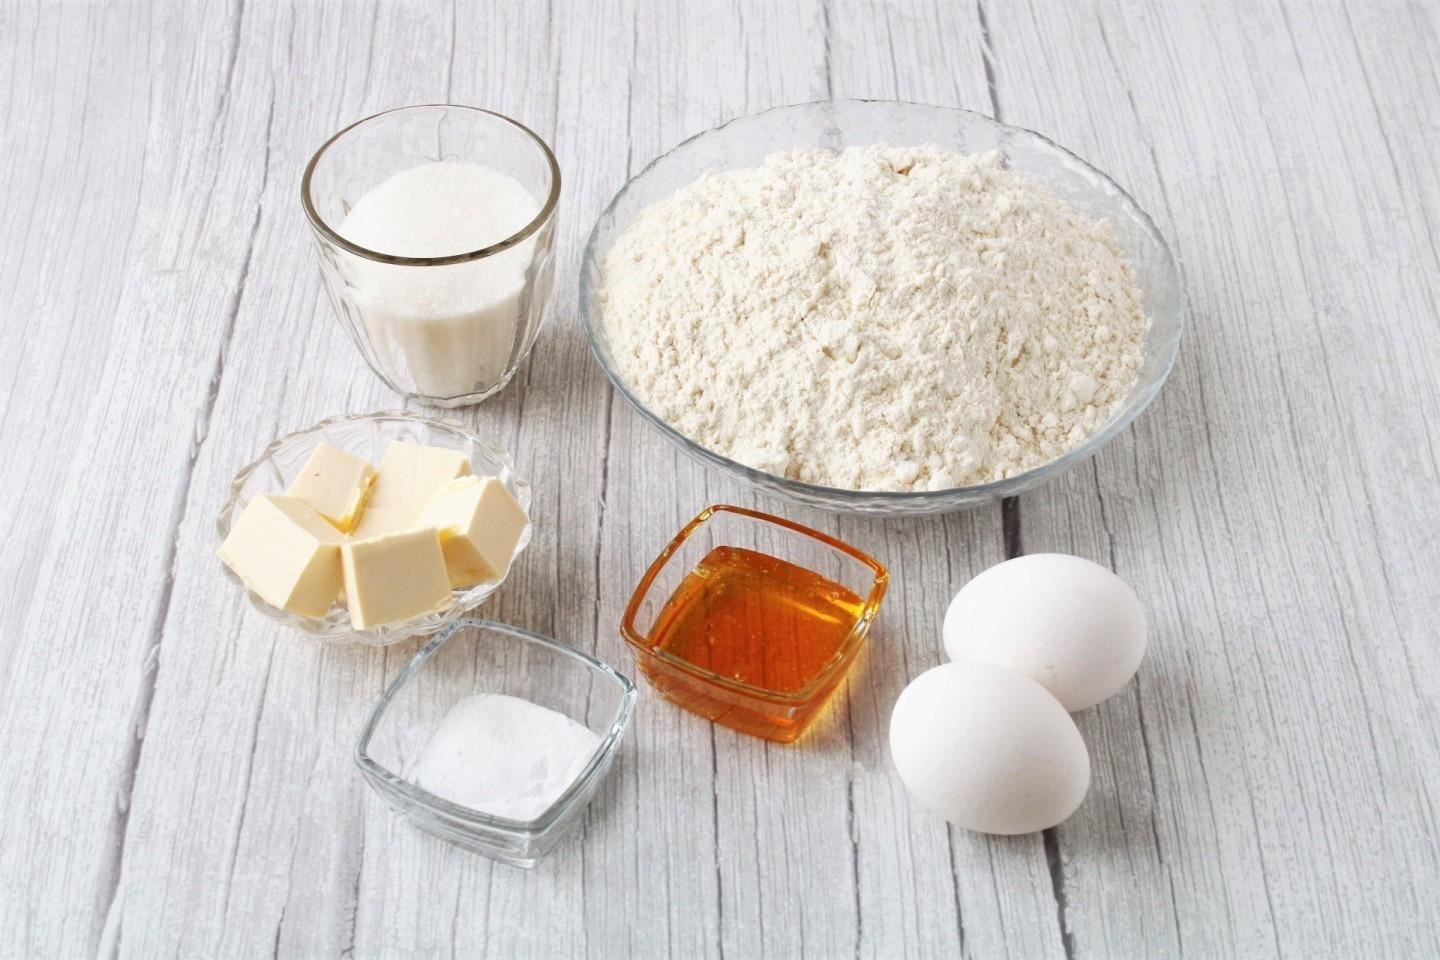 Торт яйца сахар мука масло. Ингредиенты для медовика. Ингредиенты для медовика классического. Мука сода яйца и сахар. Фото ингредиентов для медовика.